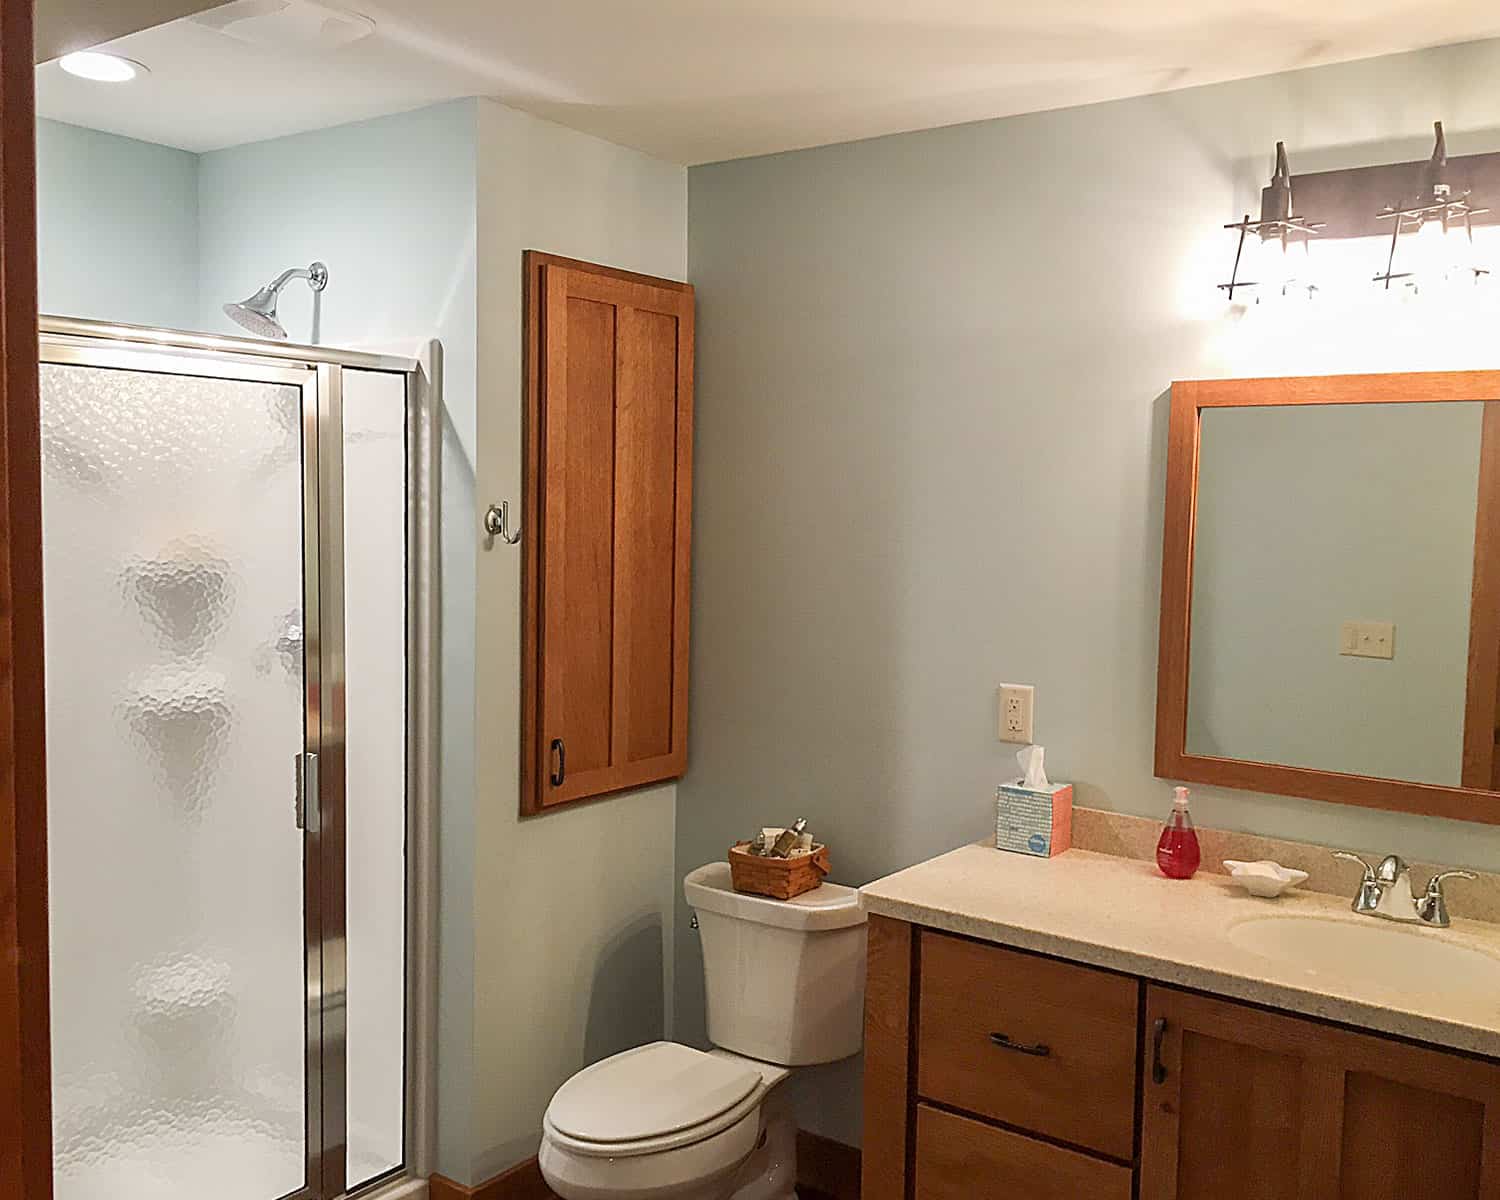 Lemel Homes Remodeling - Basement - 1/2 bath - vanity, closet shower